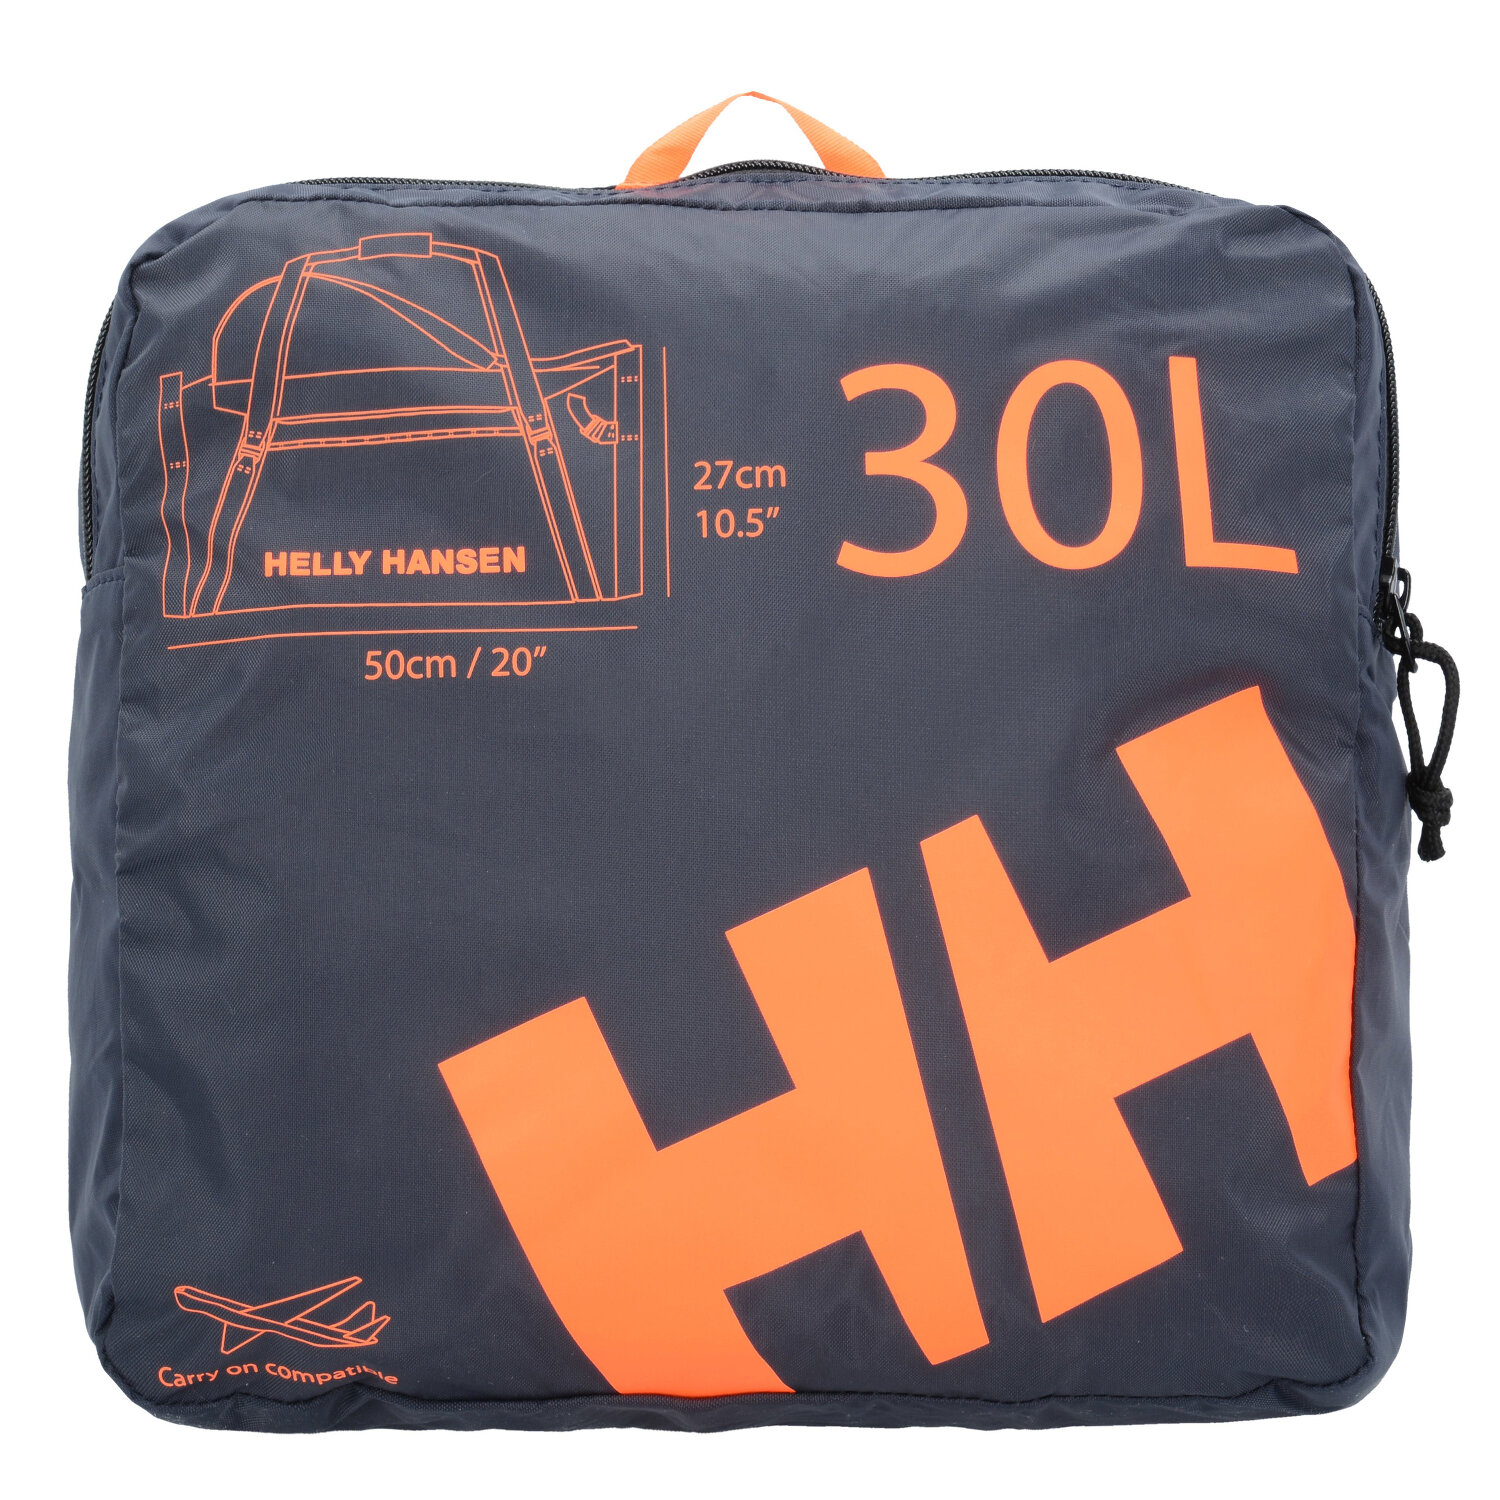 Helly Hansen Bolsa Duffle Bag 2 30L 50 cm | Maletas.es